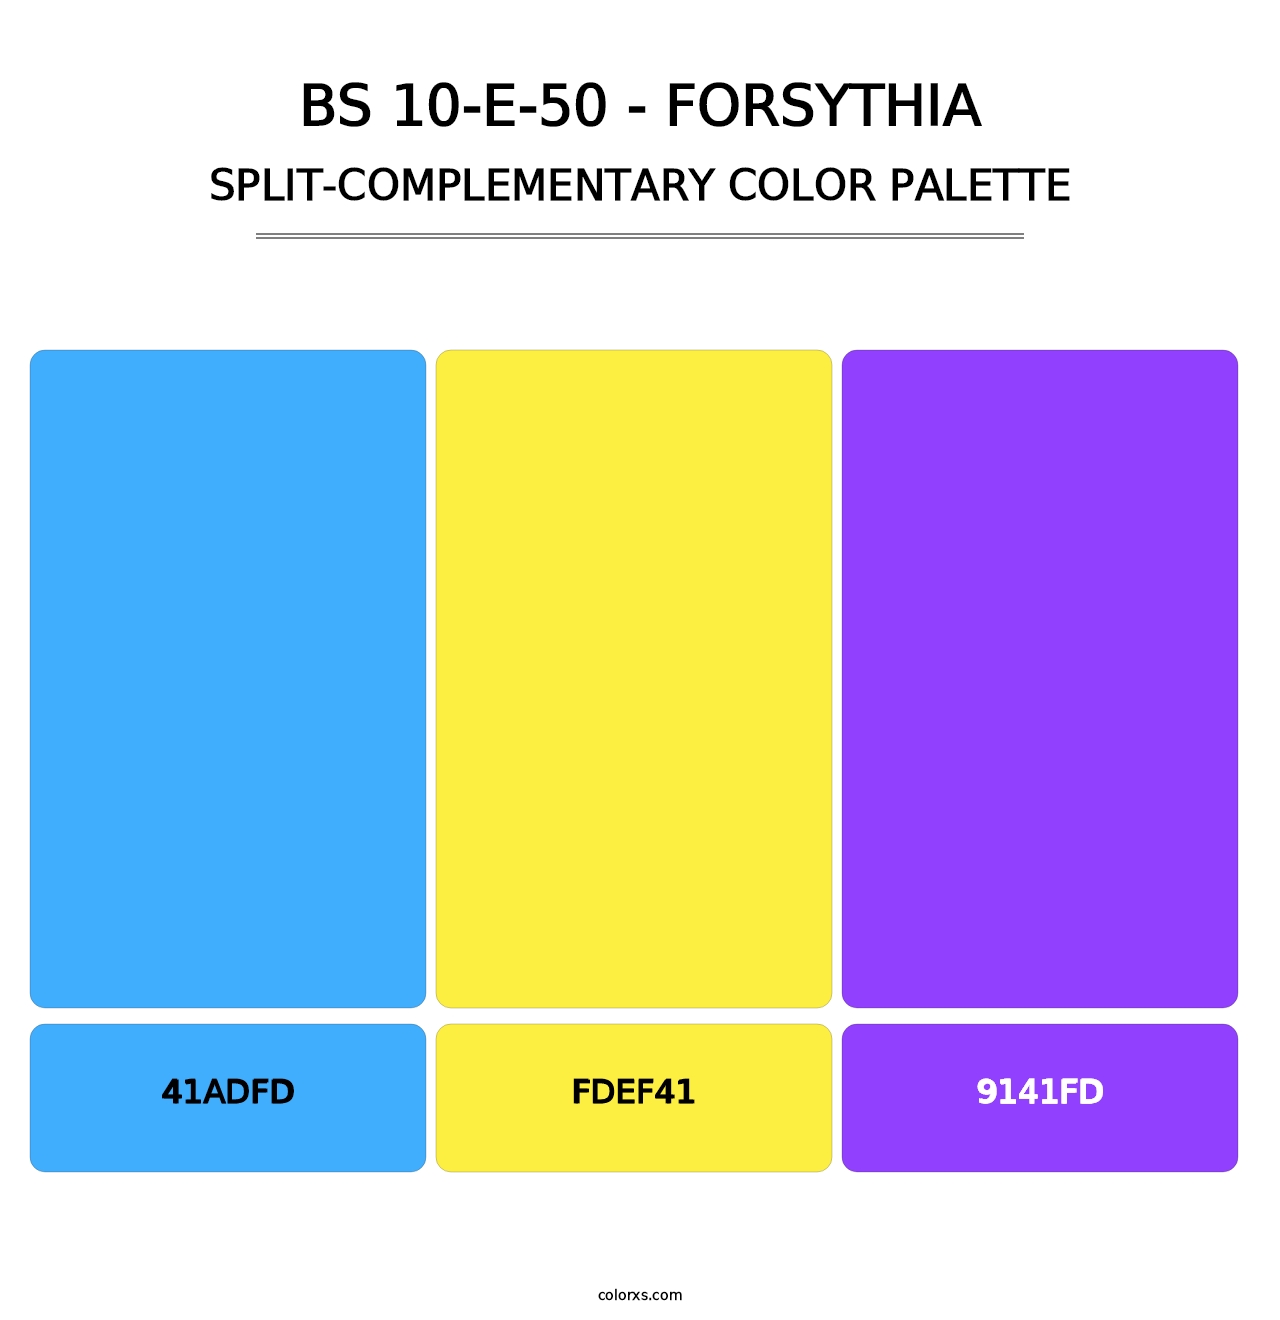 BS 10-E-50 - Forsythia - Split-Complementary Color Palette